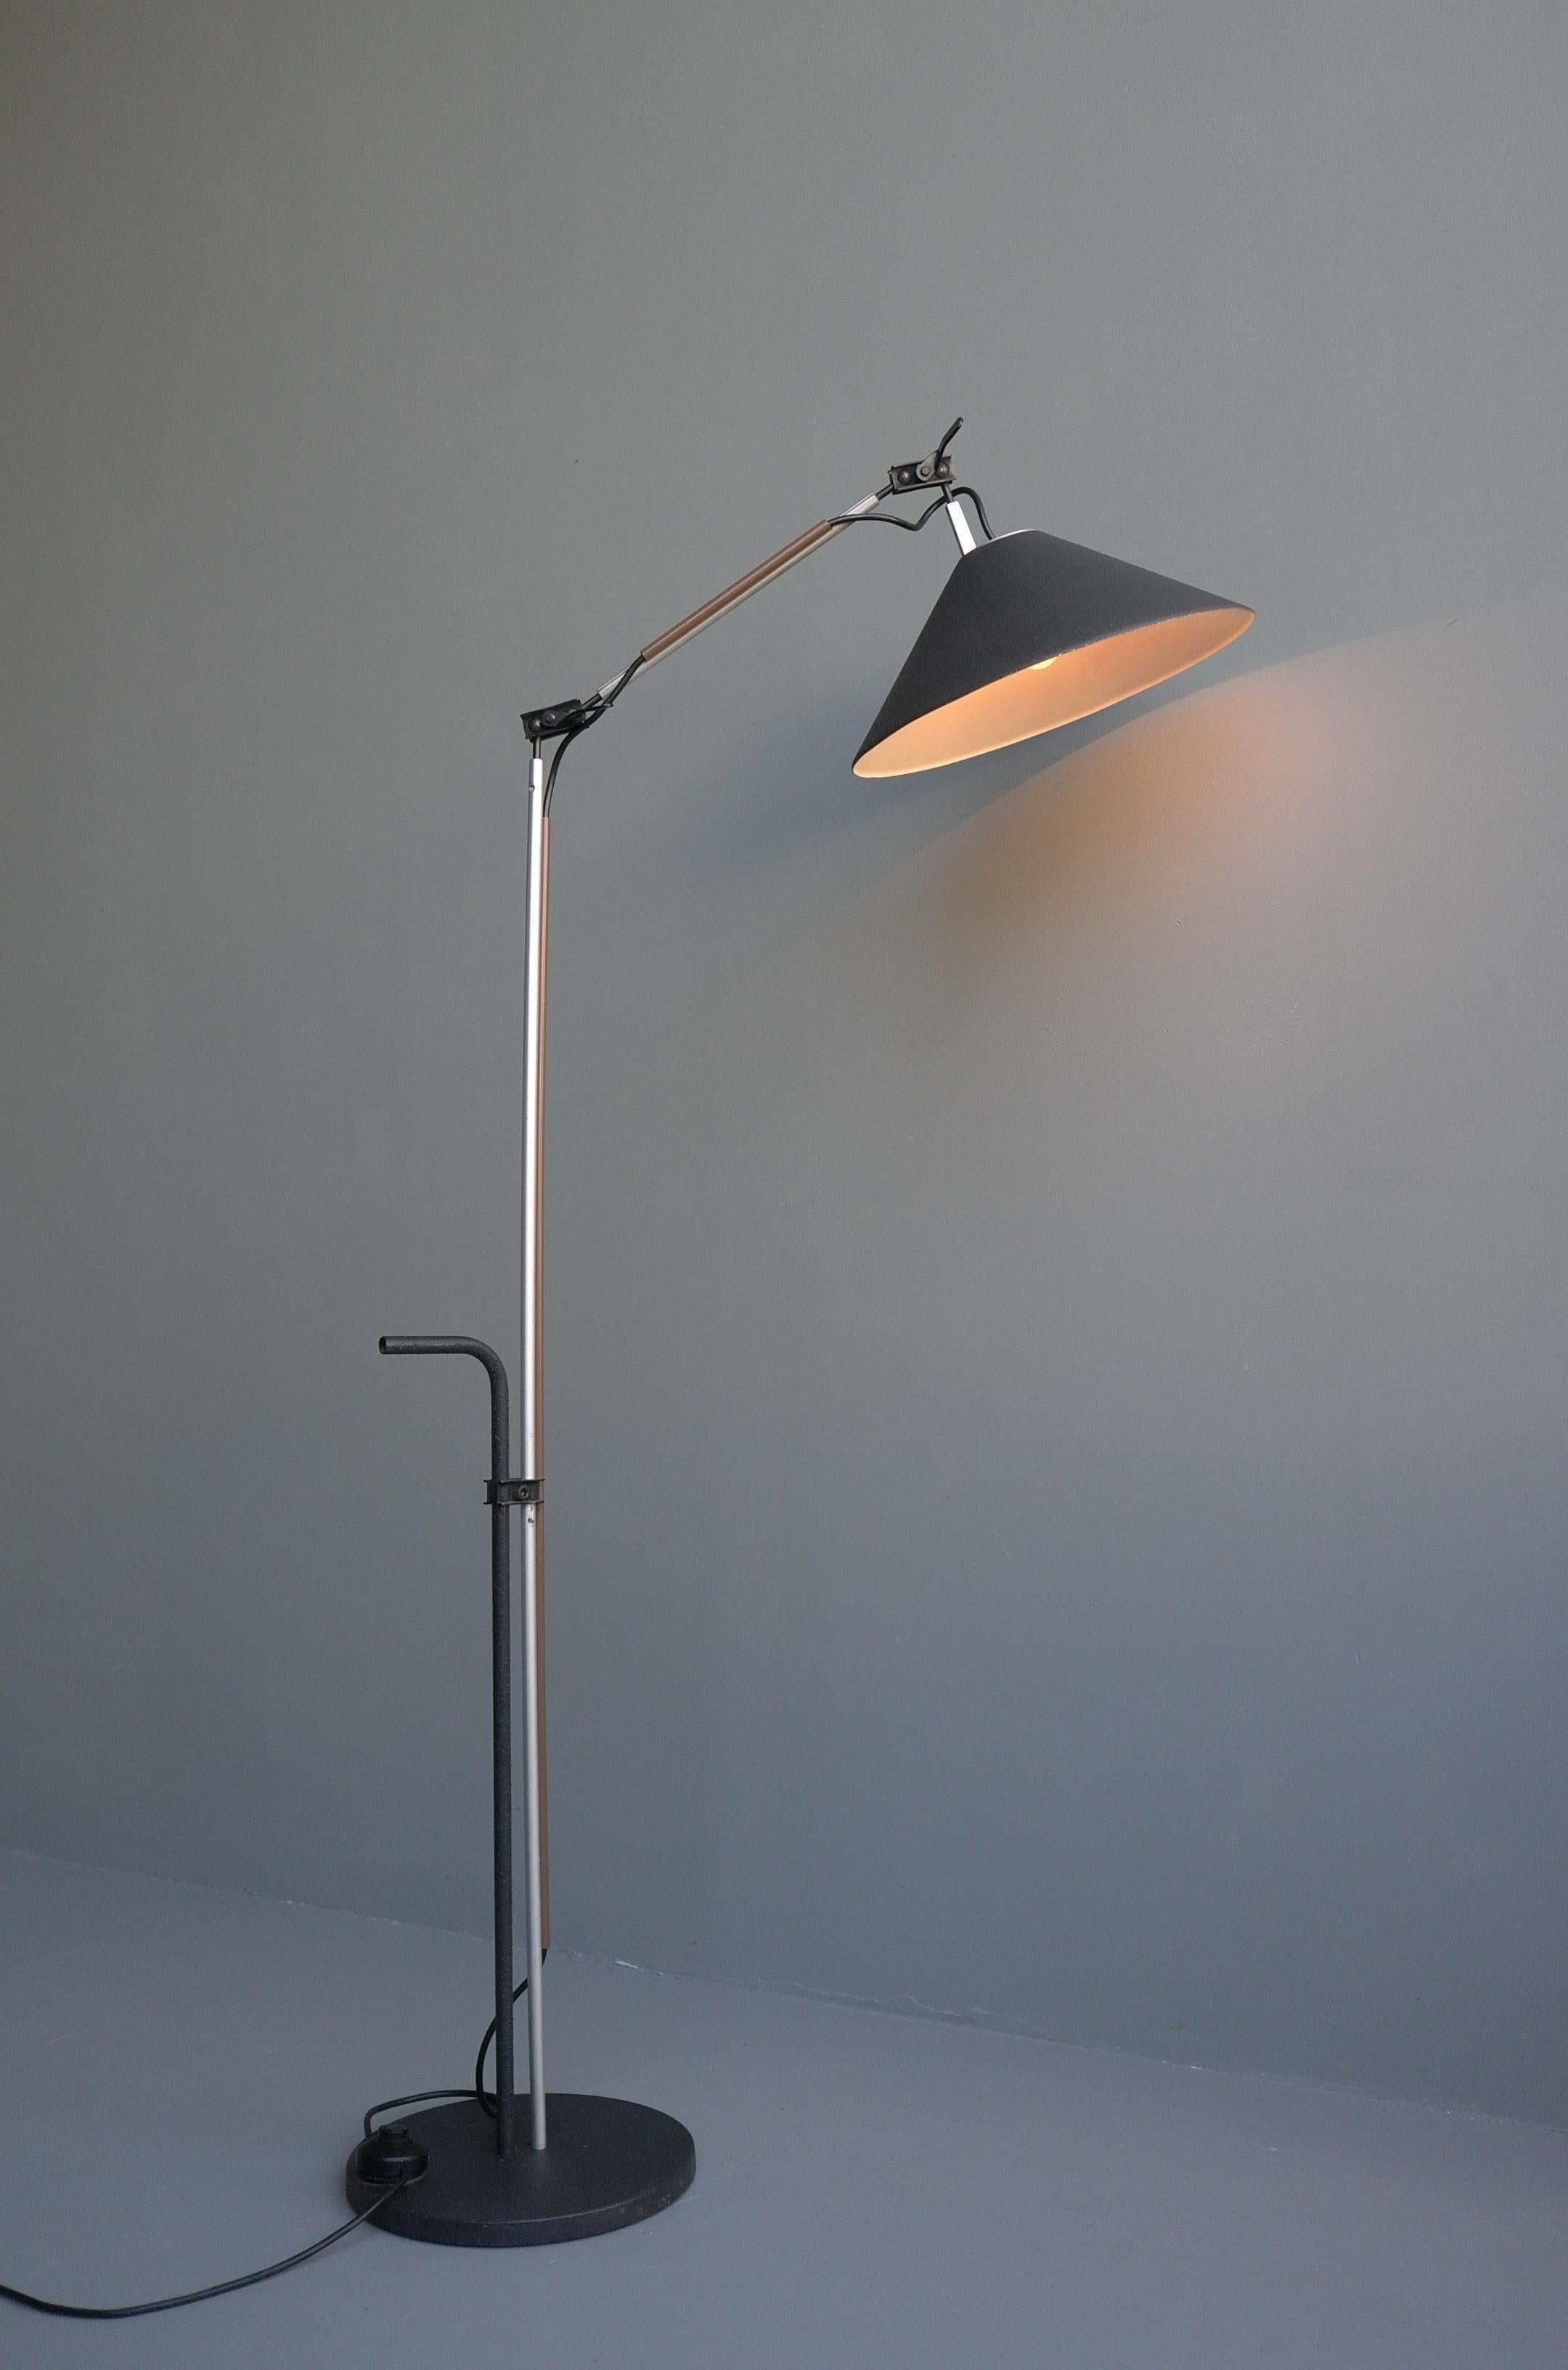 Enzo Mari Adjustable Floor Lamp 